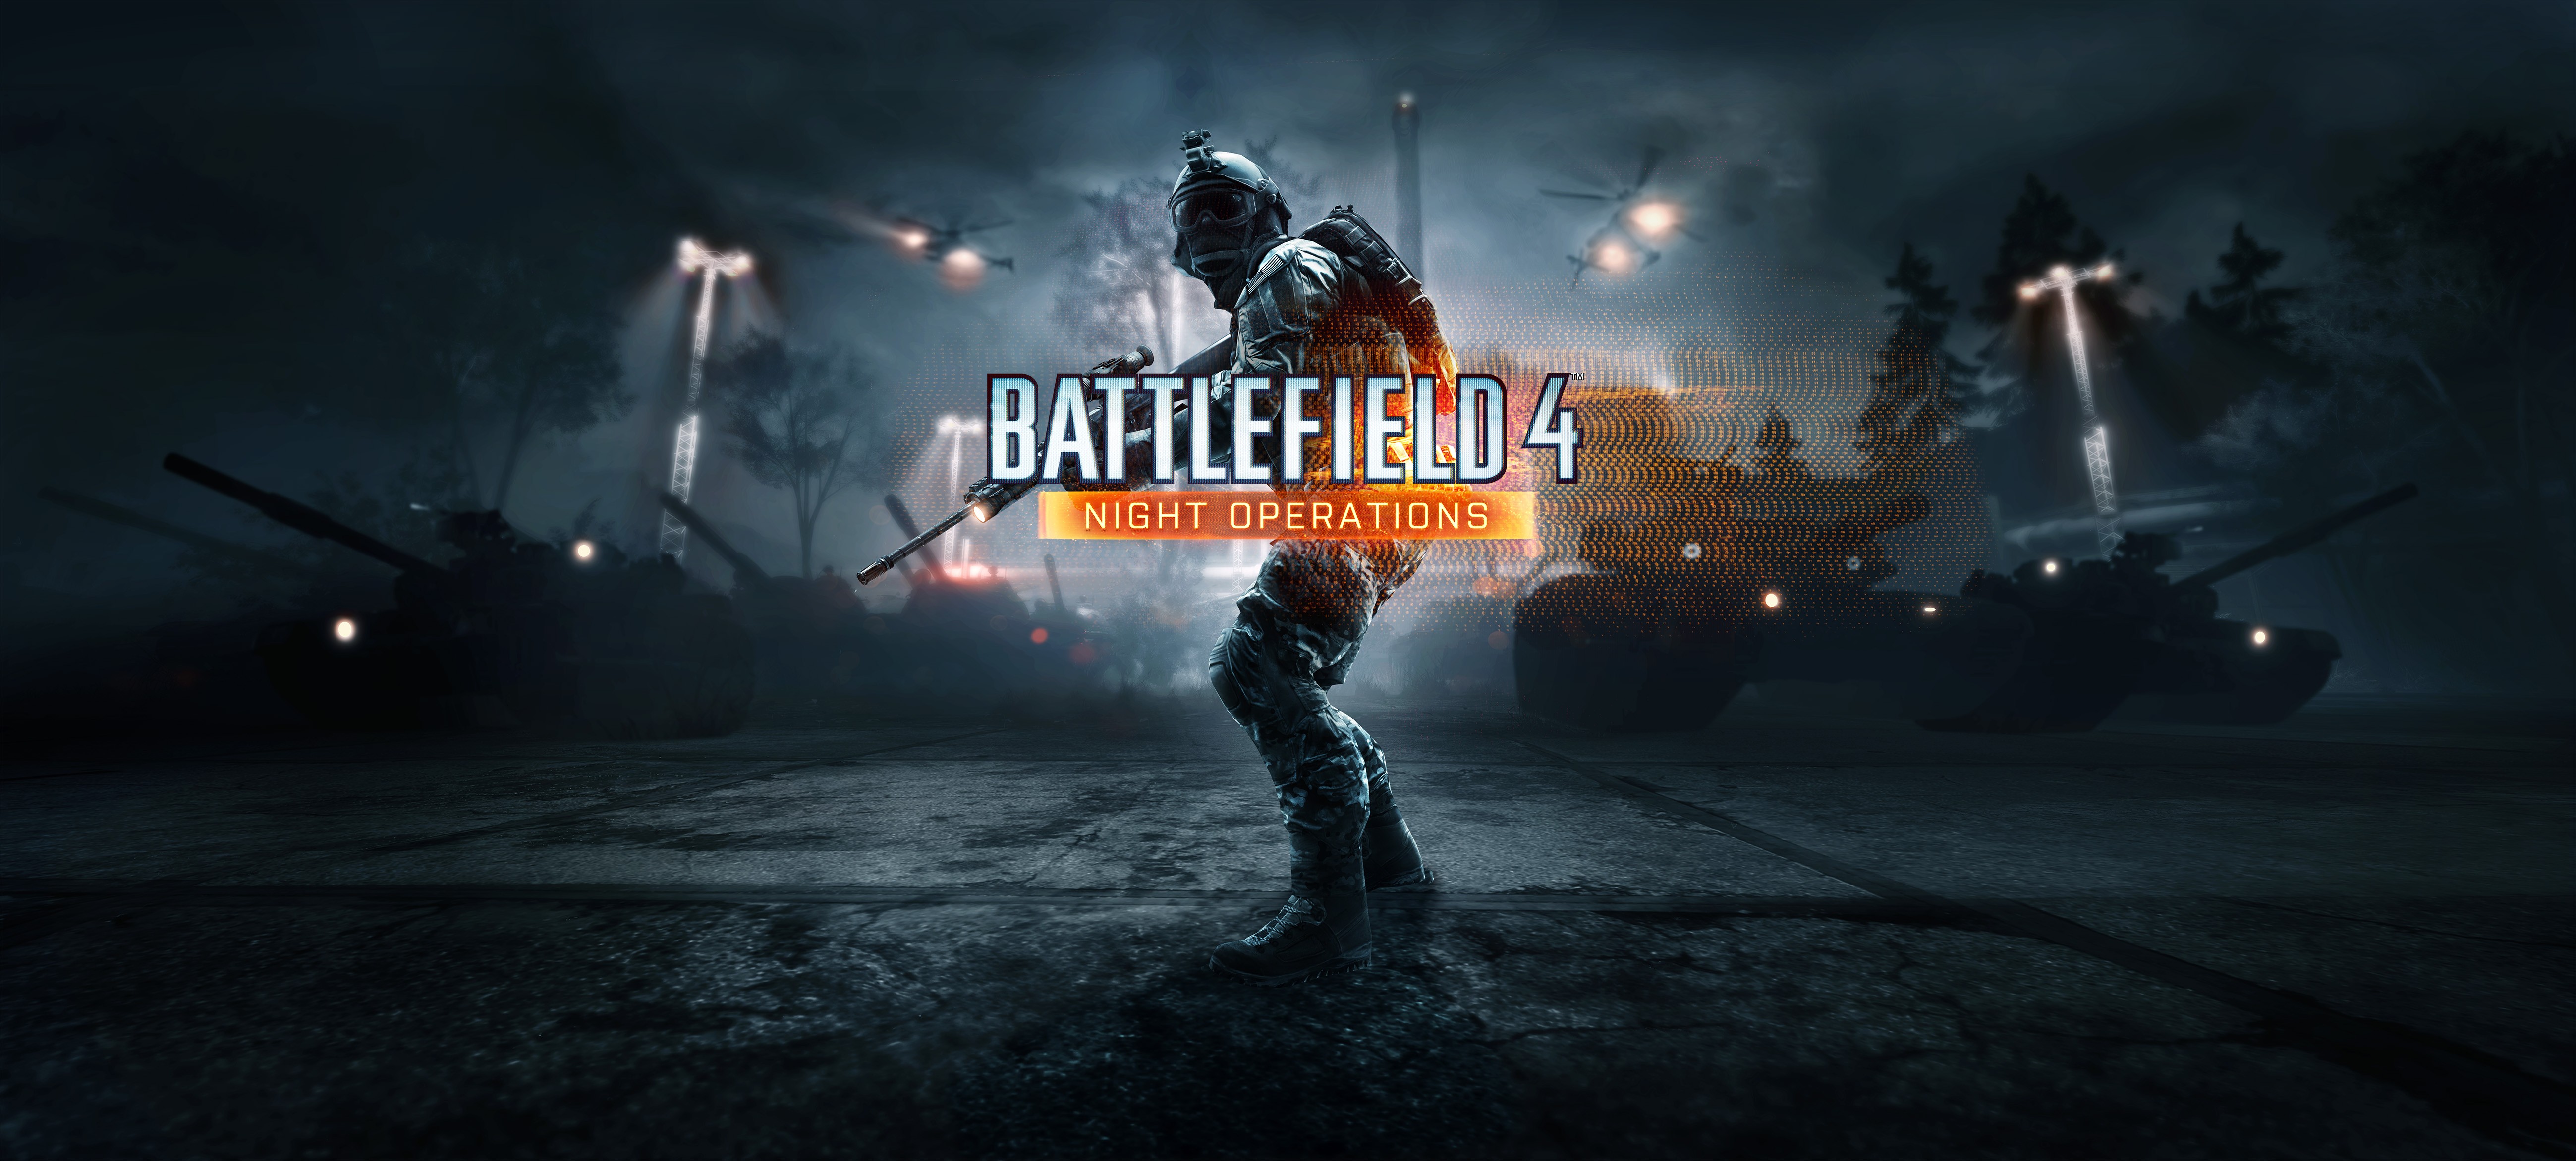 Battlefield 4 Battlefield 4 Night Operations EA Dice EA DiCE EA Games Military PC Gaming 5198x2343